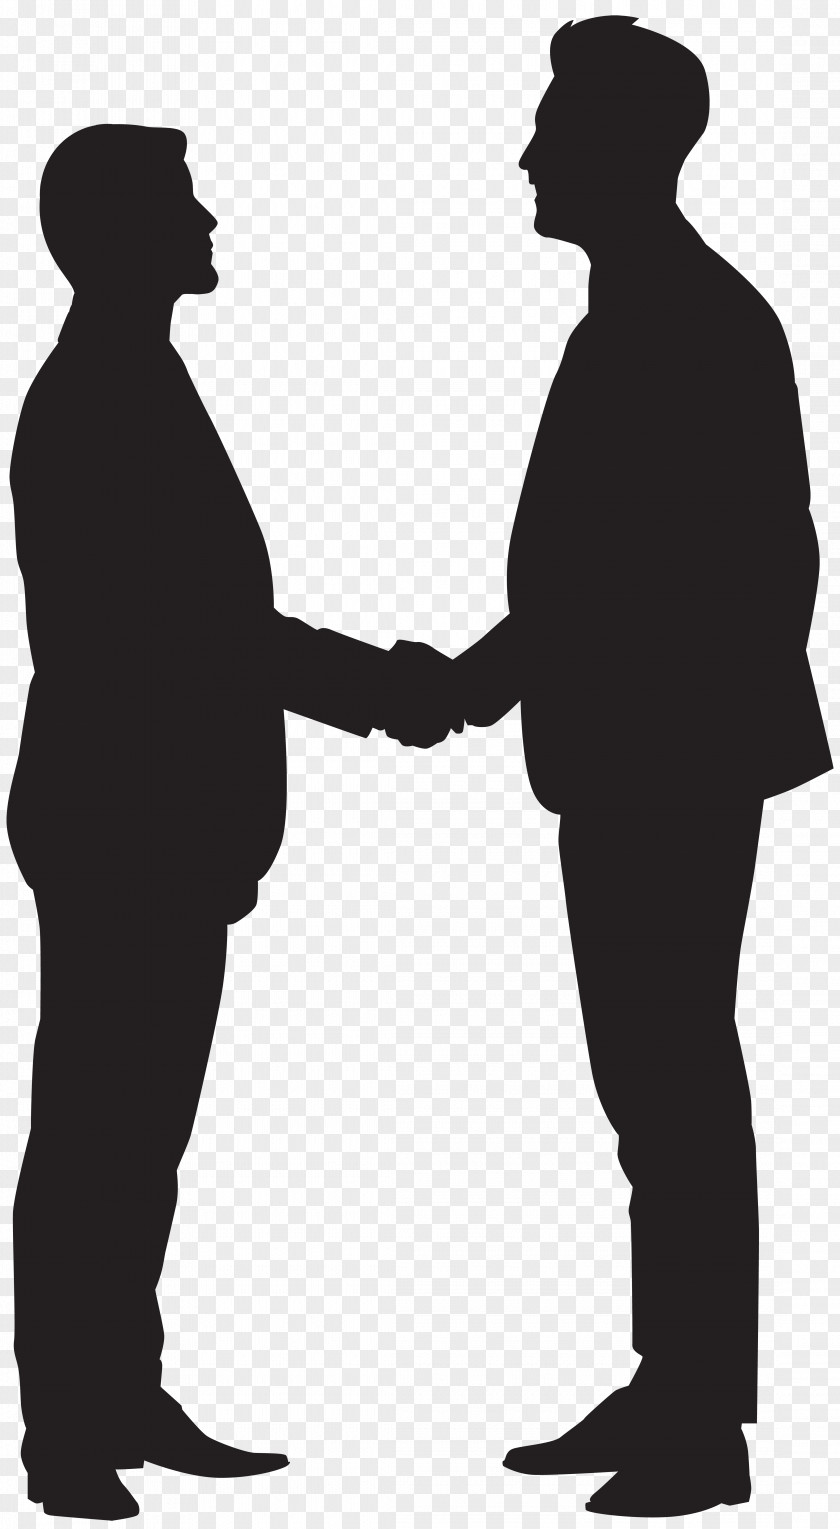 Men Shaking Hands Silhouette Clip Art Image Handshake PNG